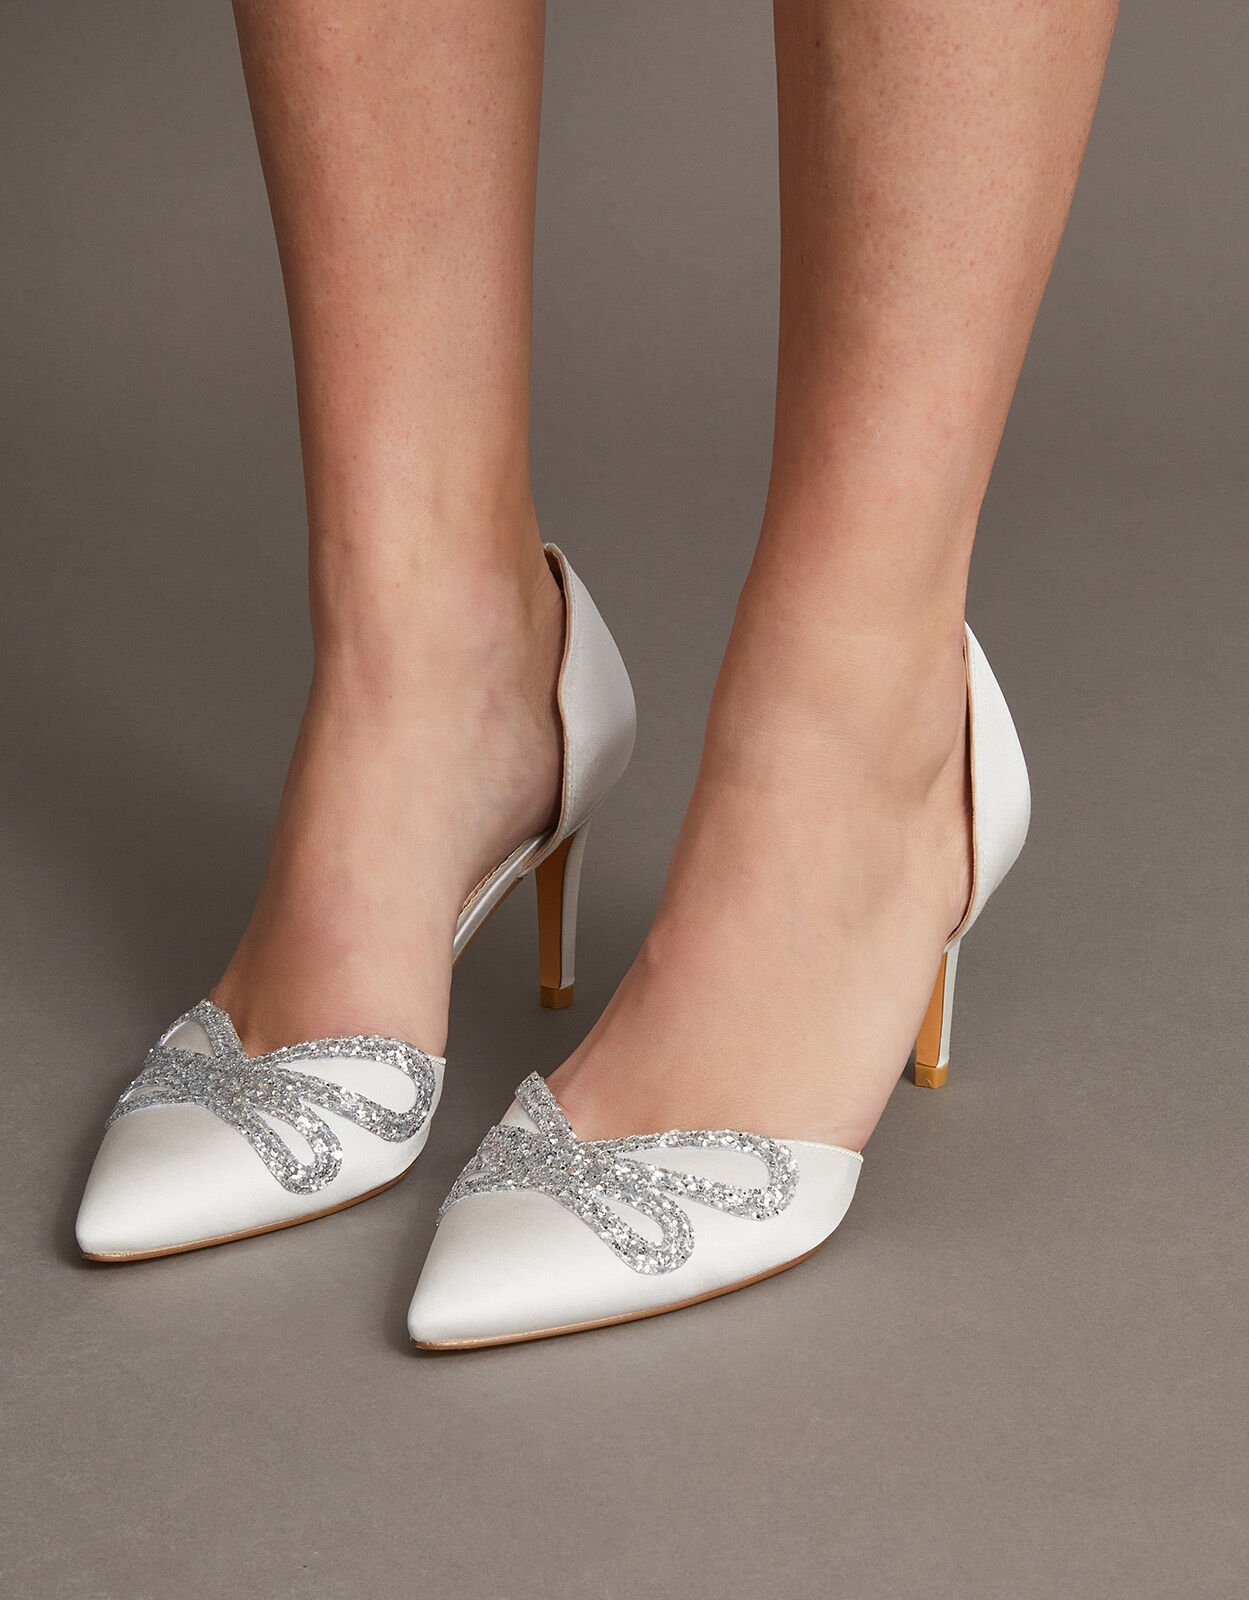 Ivory Satin Block Heel with Wrapped Ankle Tie | Bride heels, Bridal shoes, Bridal  heels